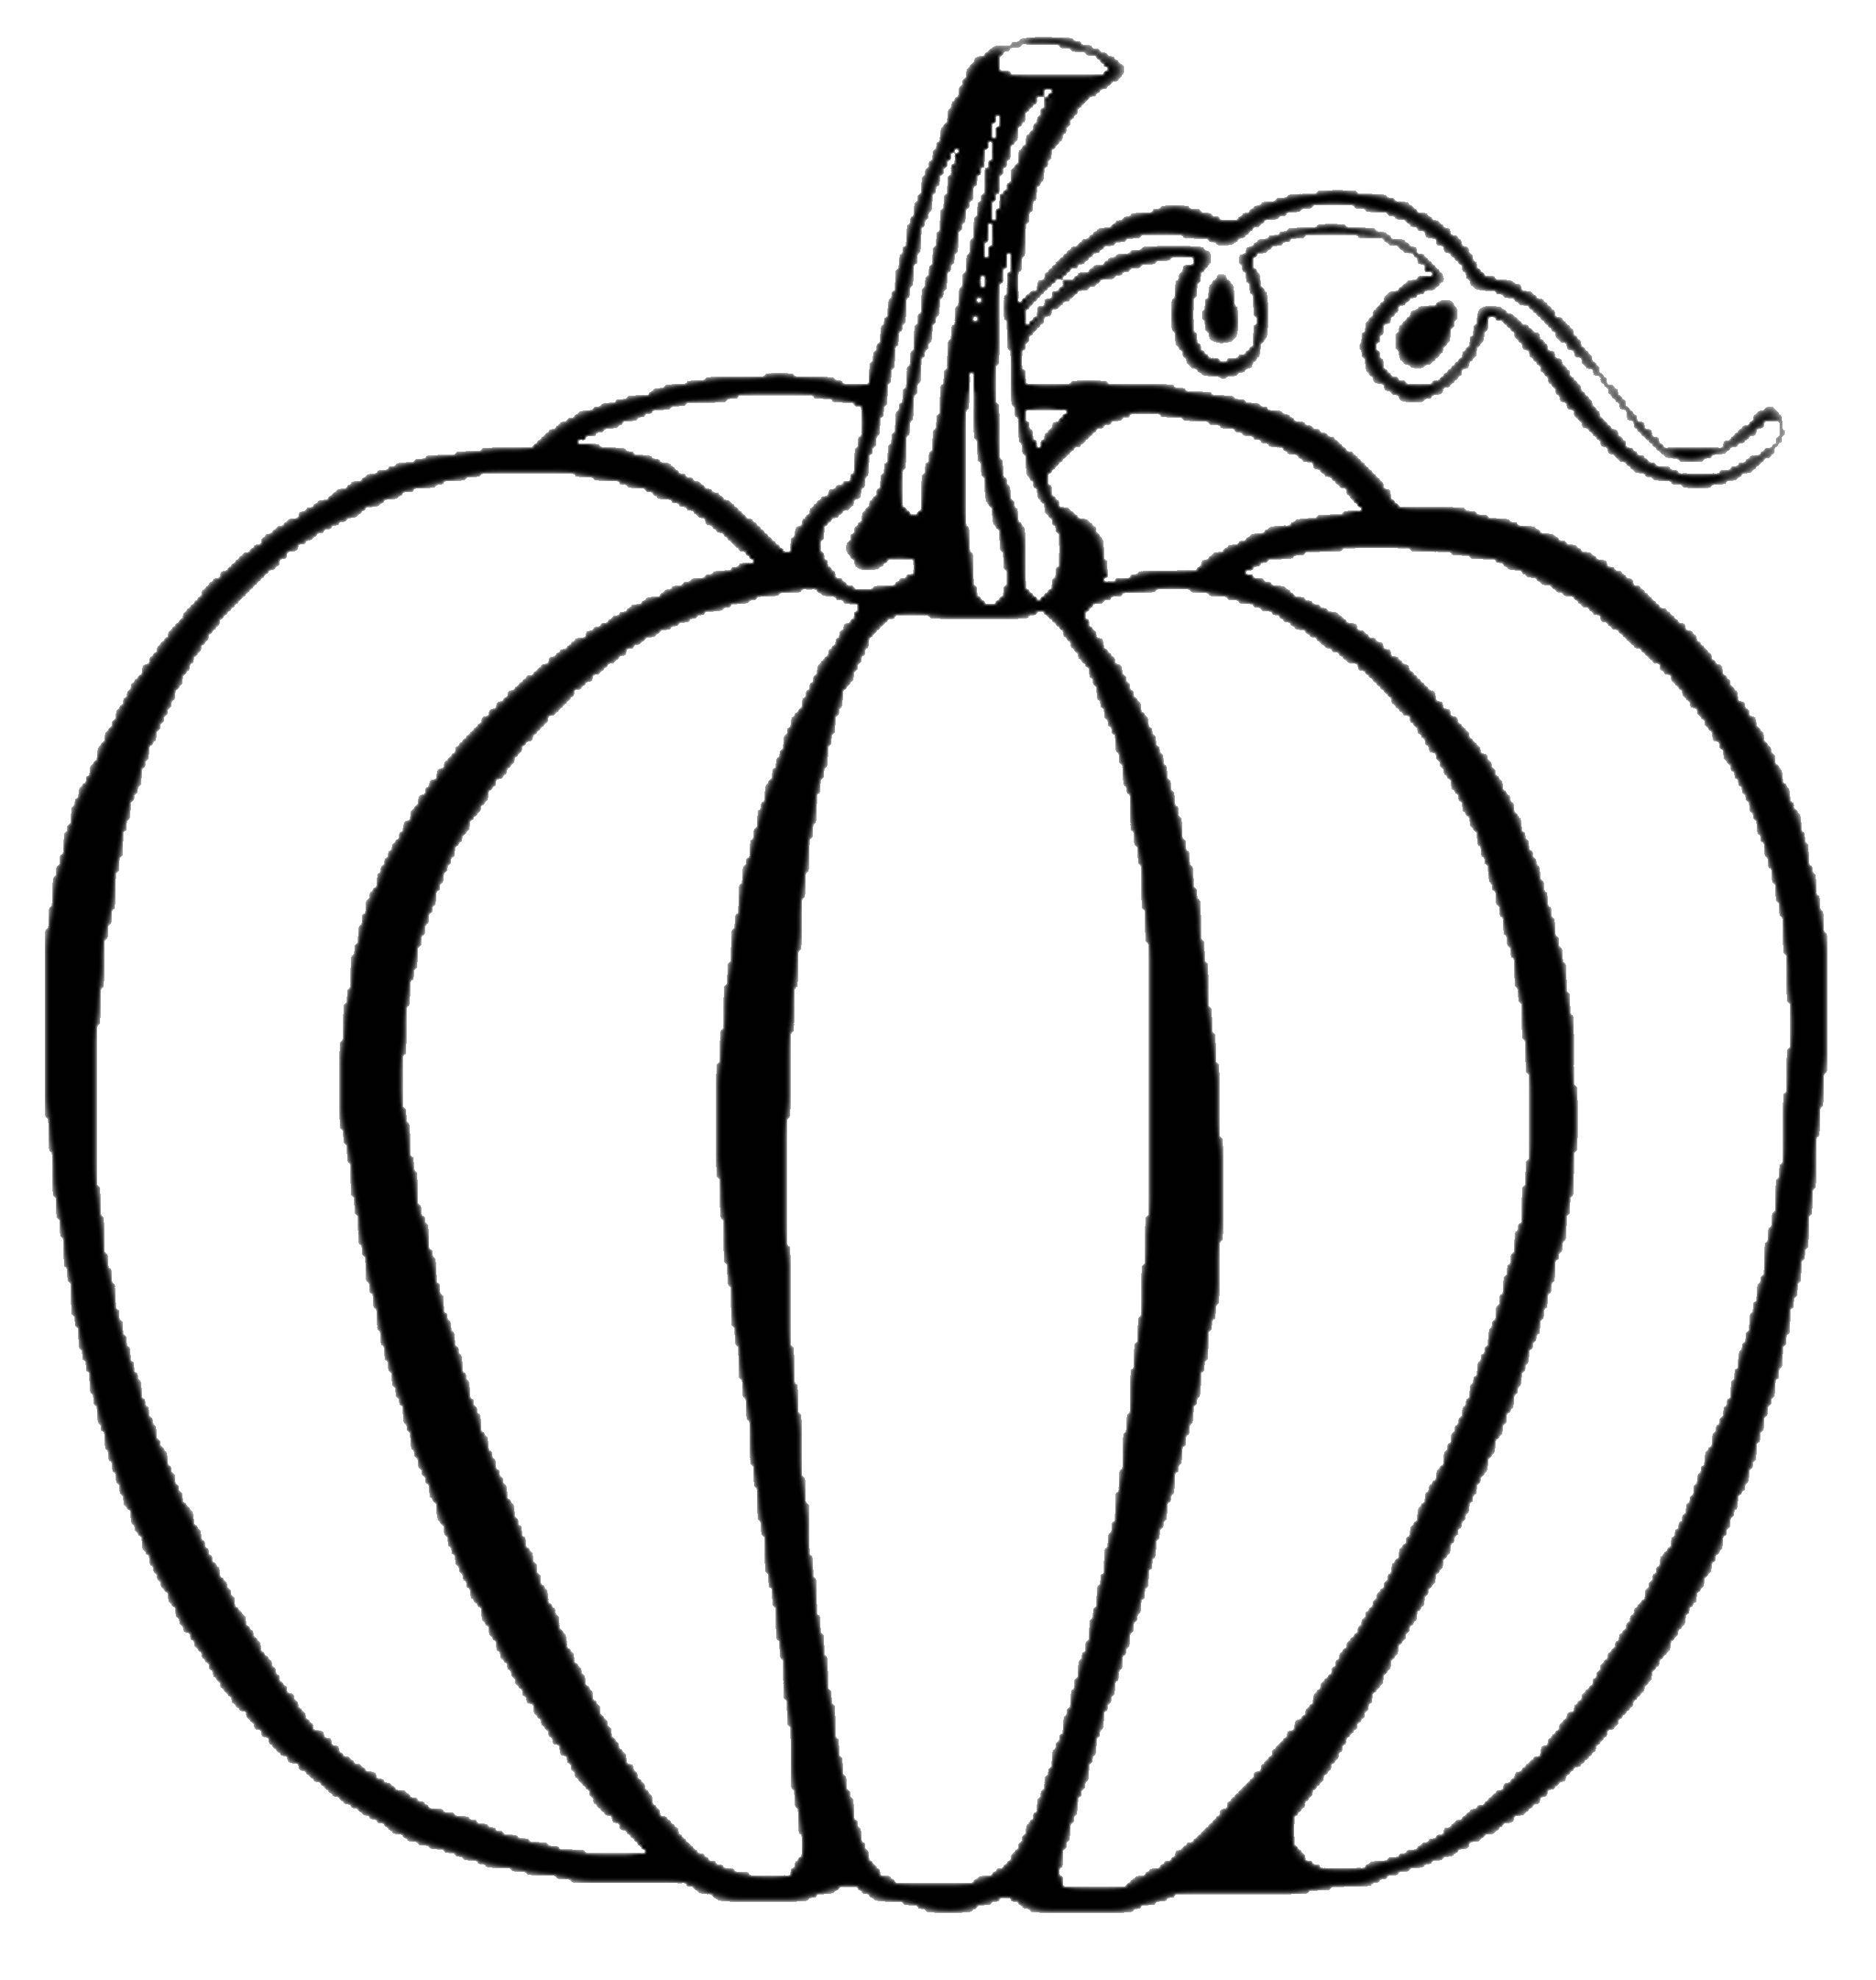 Название: Раскраска Осенняя тыква. Категория: тыква на хэллоуин. Теги: тыквы, хэллоуин, праздник.